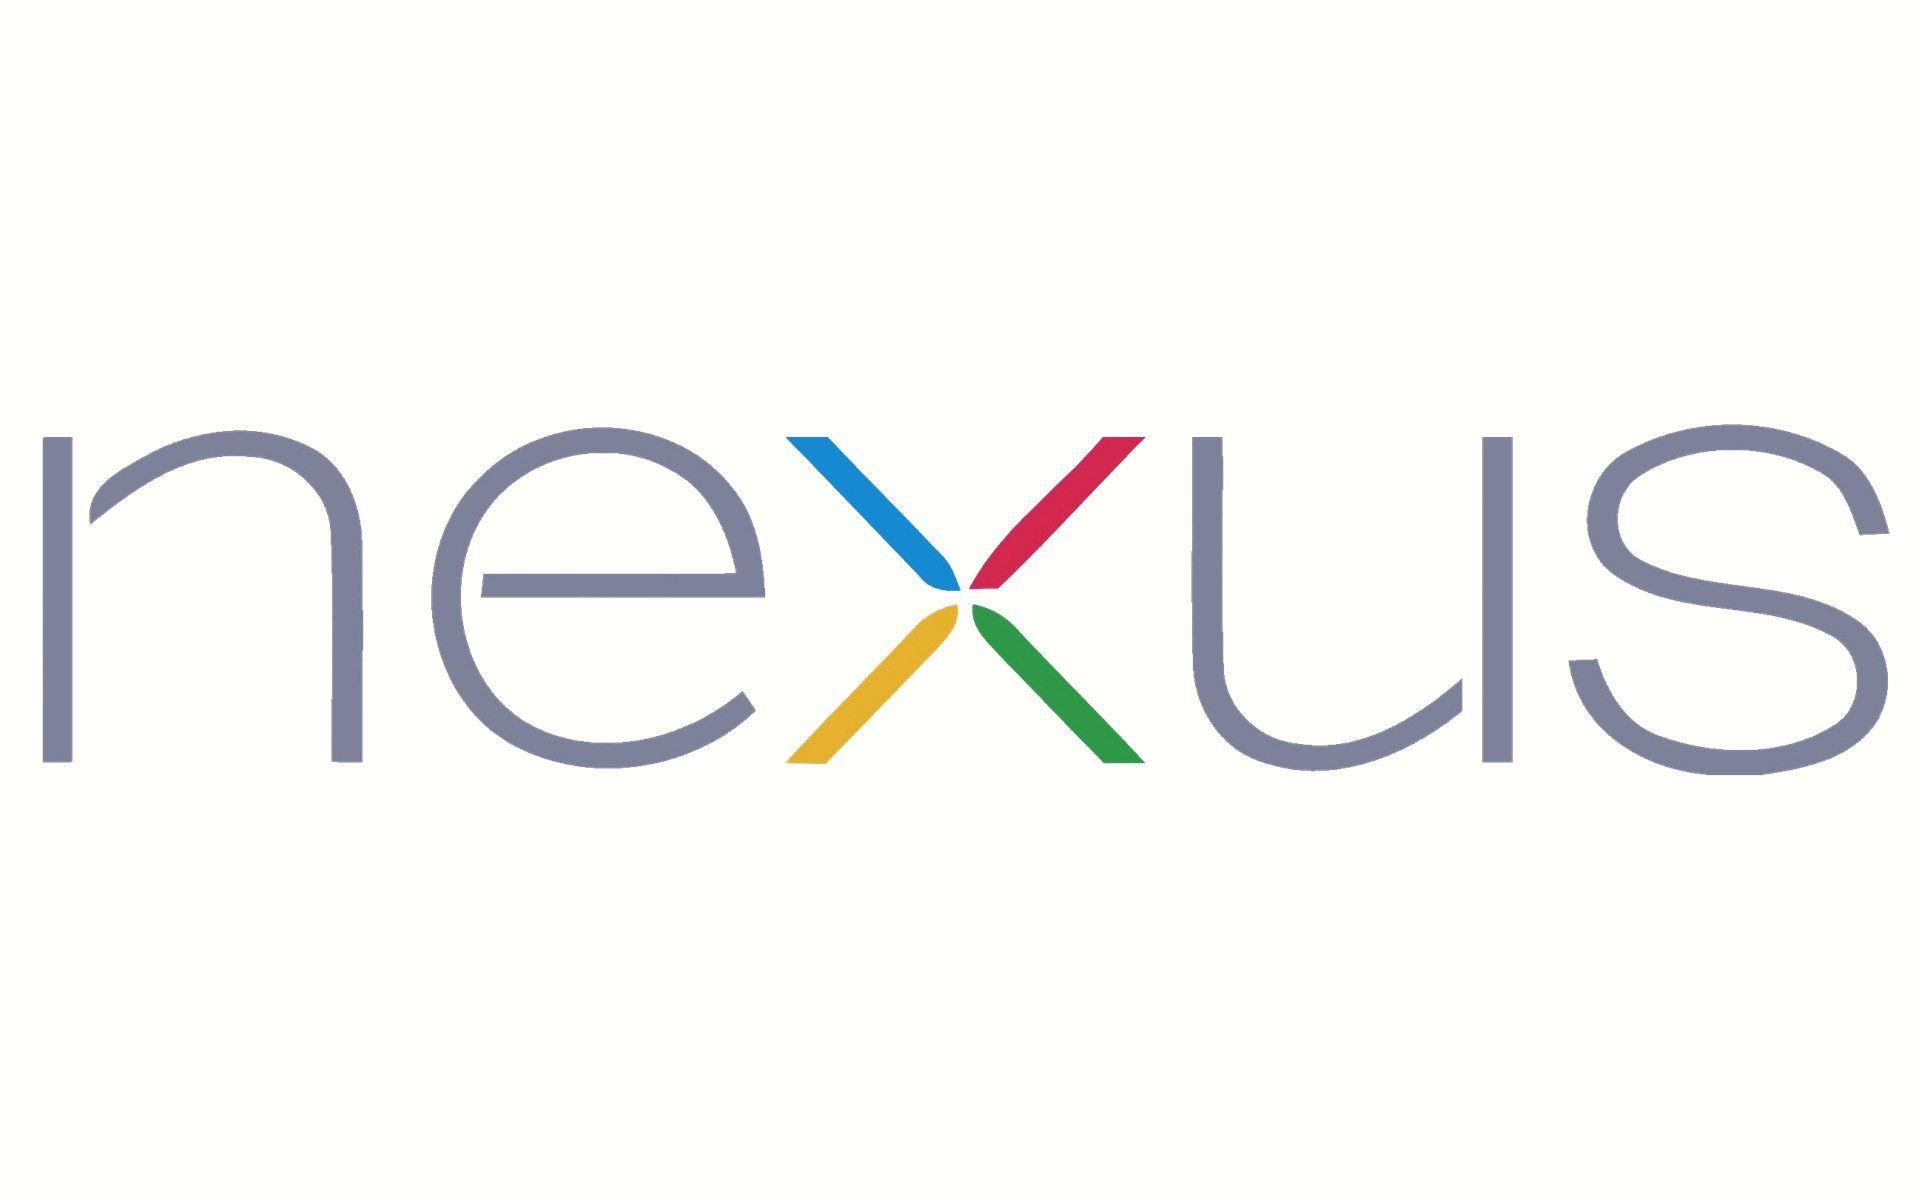 Google Nexus Logo - Nexus Logos